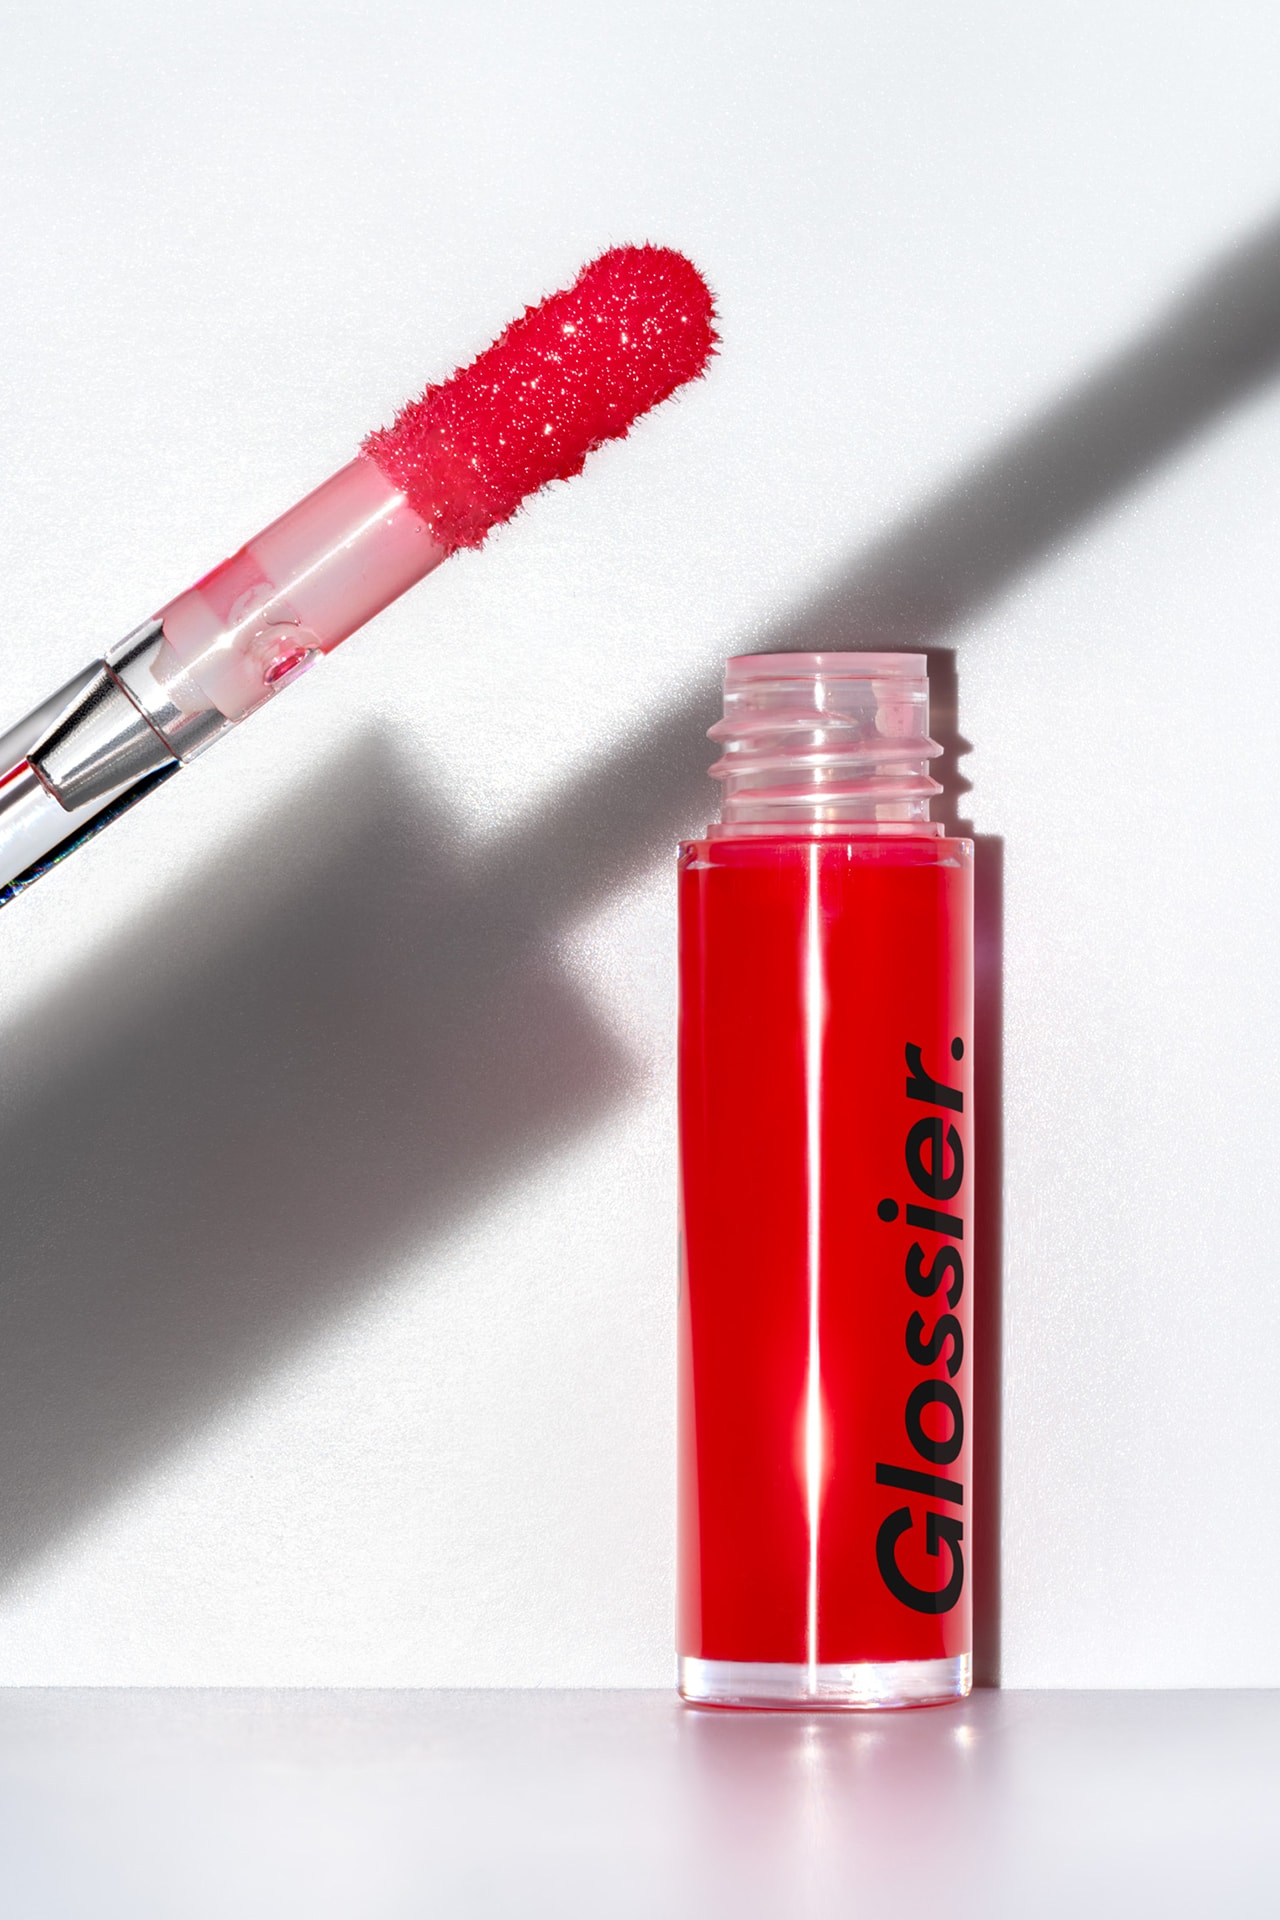 Glossier Lip Gloss Makeup Beauty Emily Weiss Packaging Red